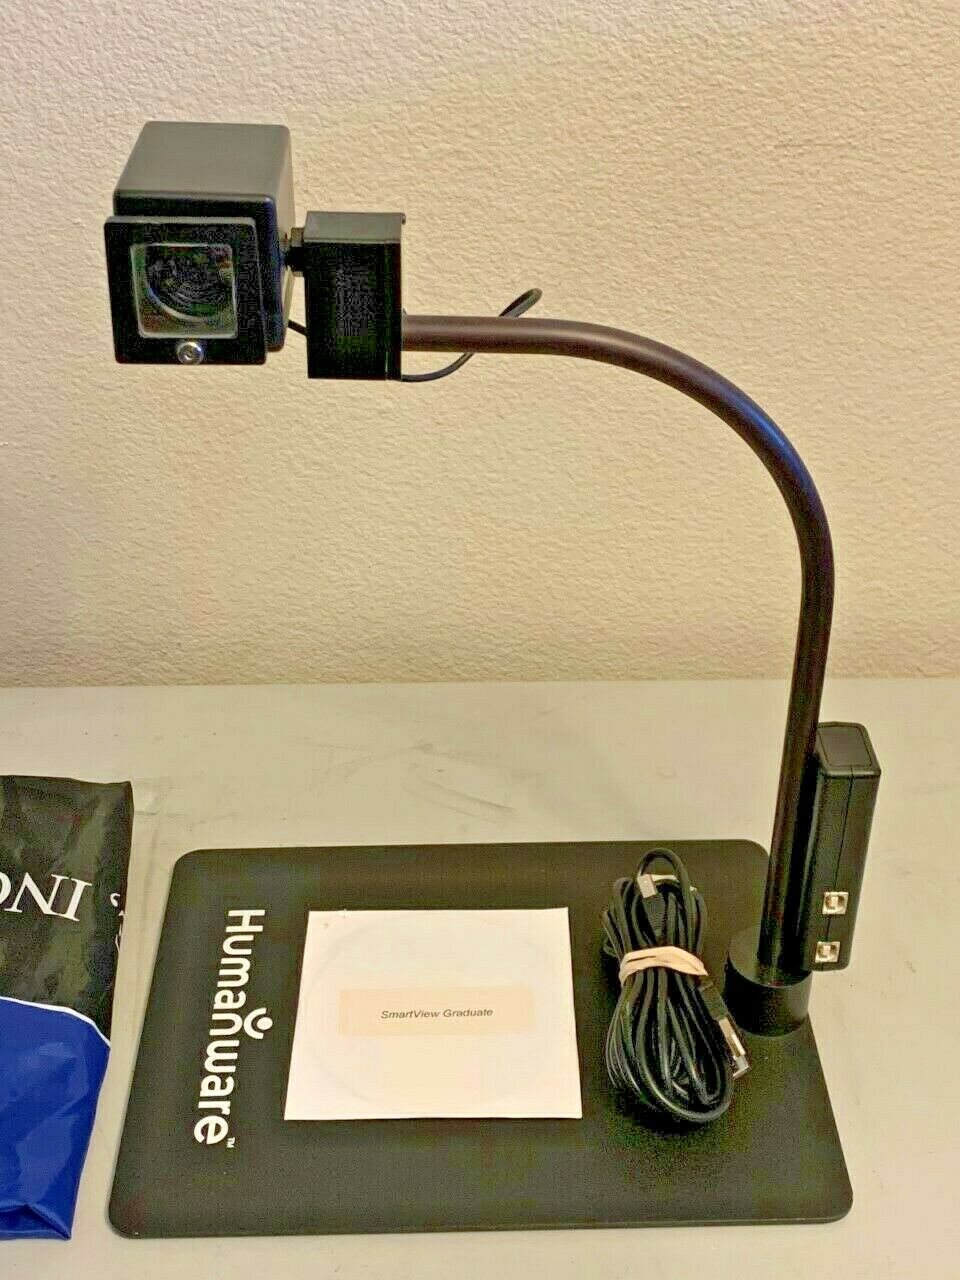 HumanWare Smartview Graduate Computer USB Portable Low Vision Video Magnifier